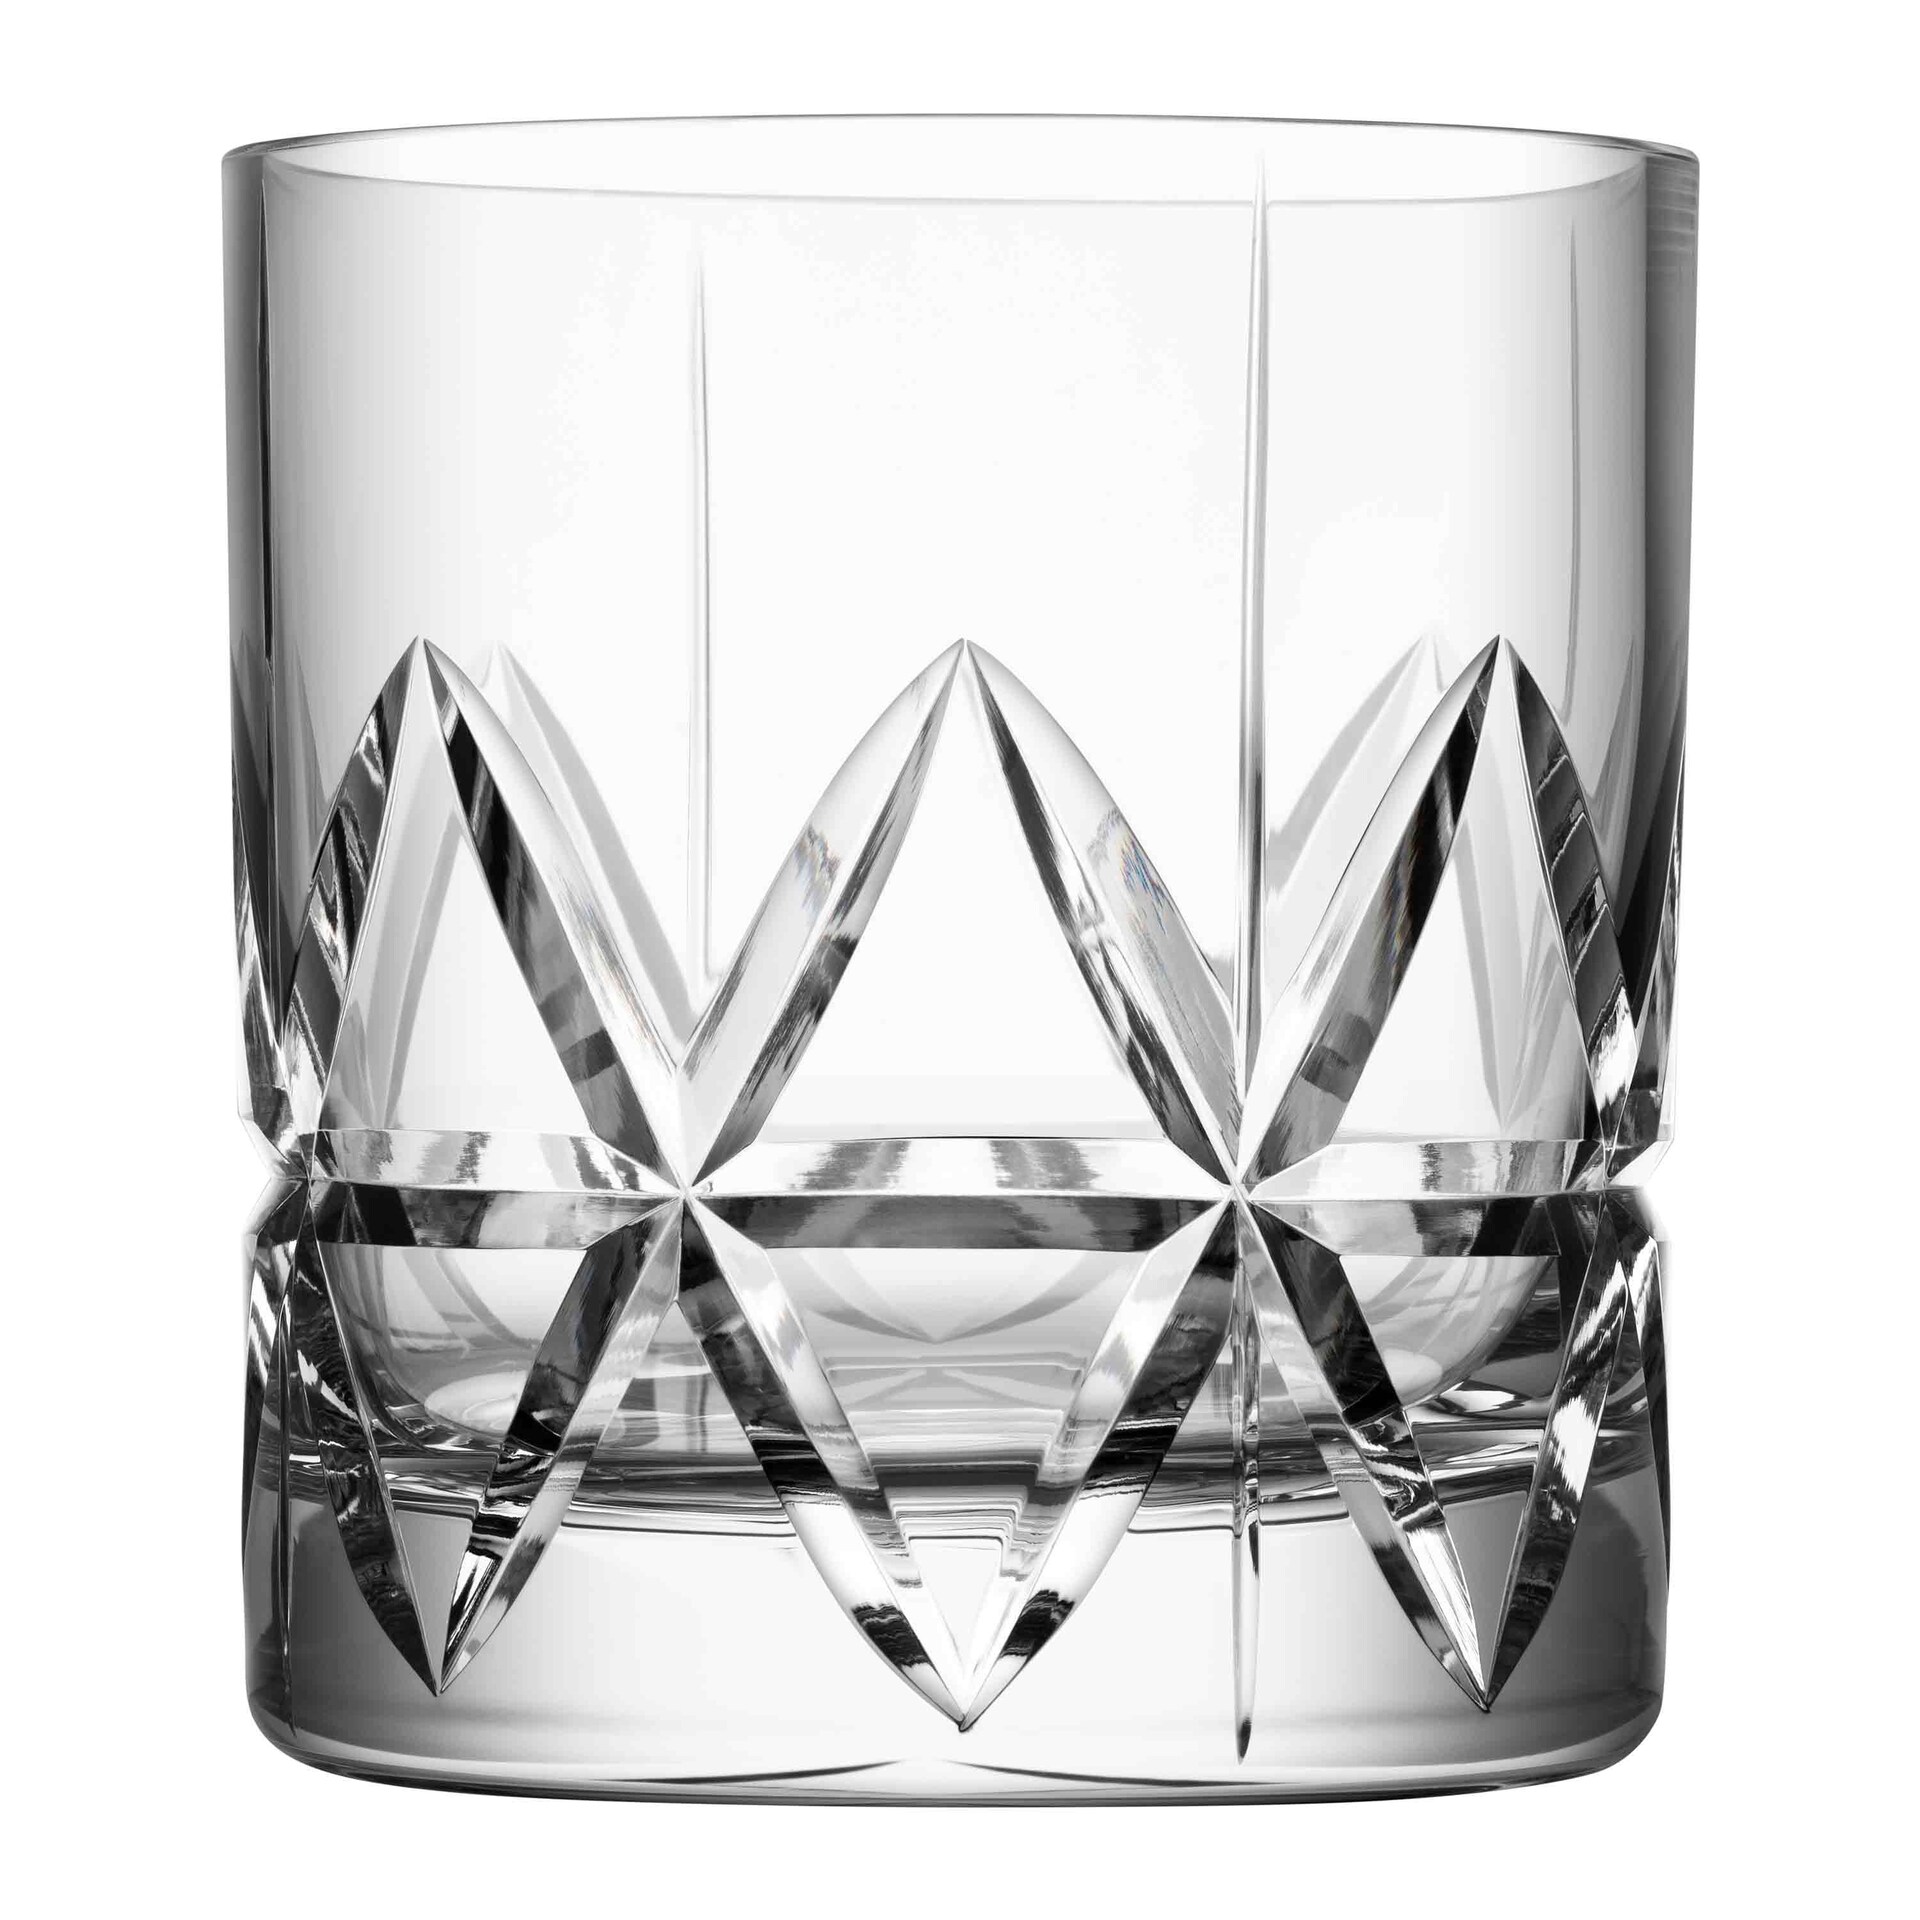 https://royaldesign.com/image/2/orrefors-peak-double-old-fashioned-whiskey-glass-34-cl-4-pack-0